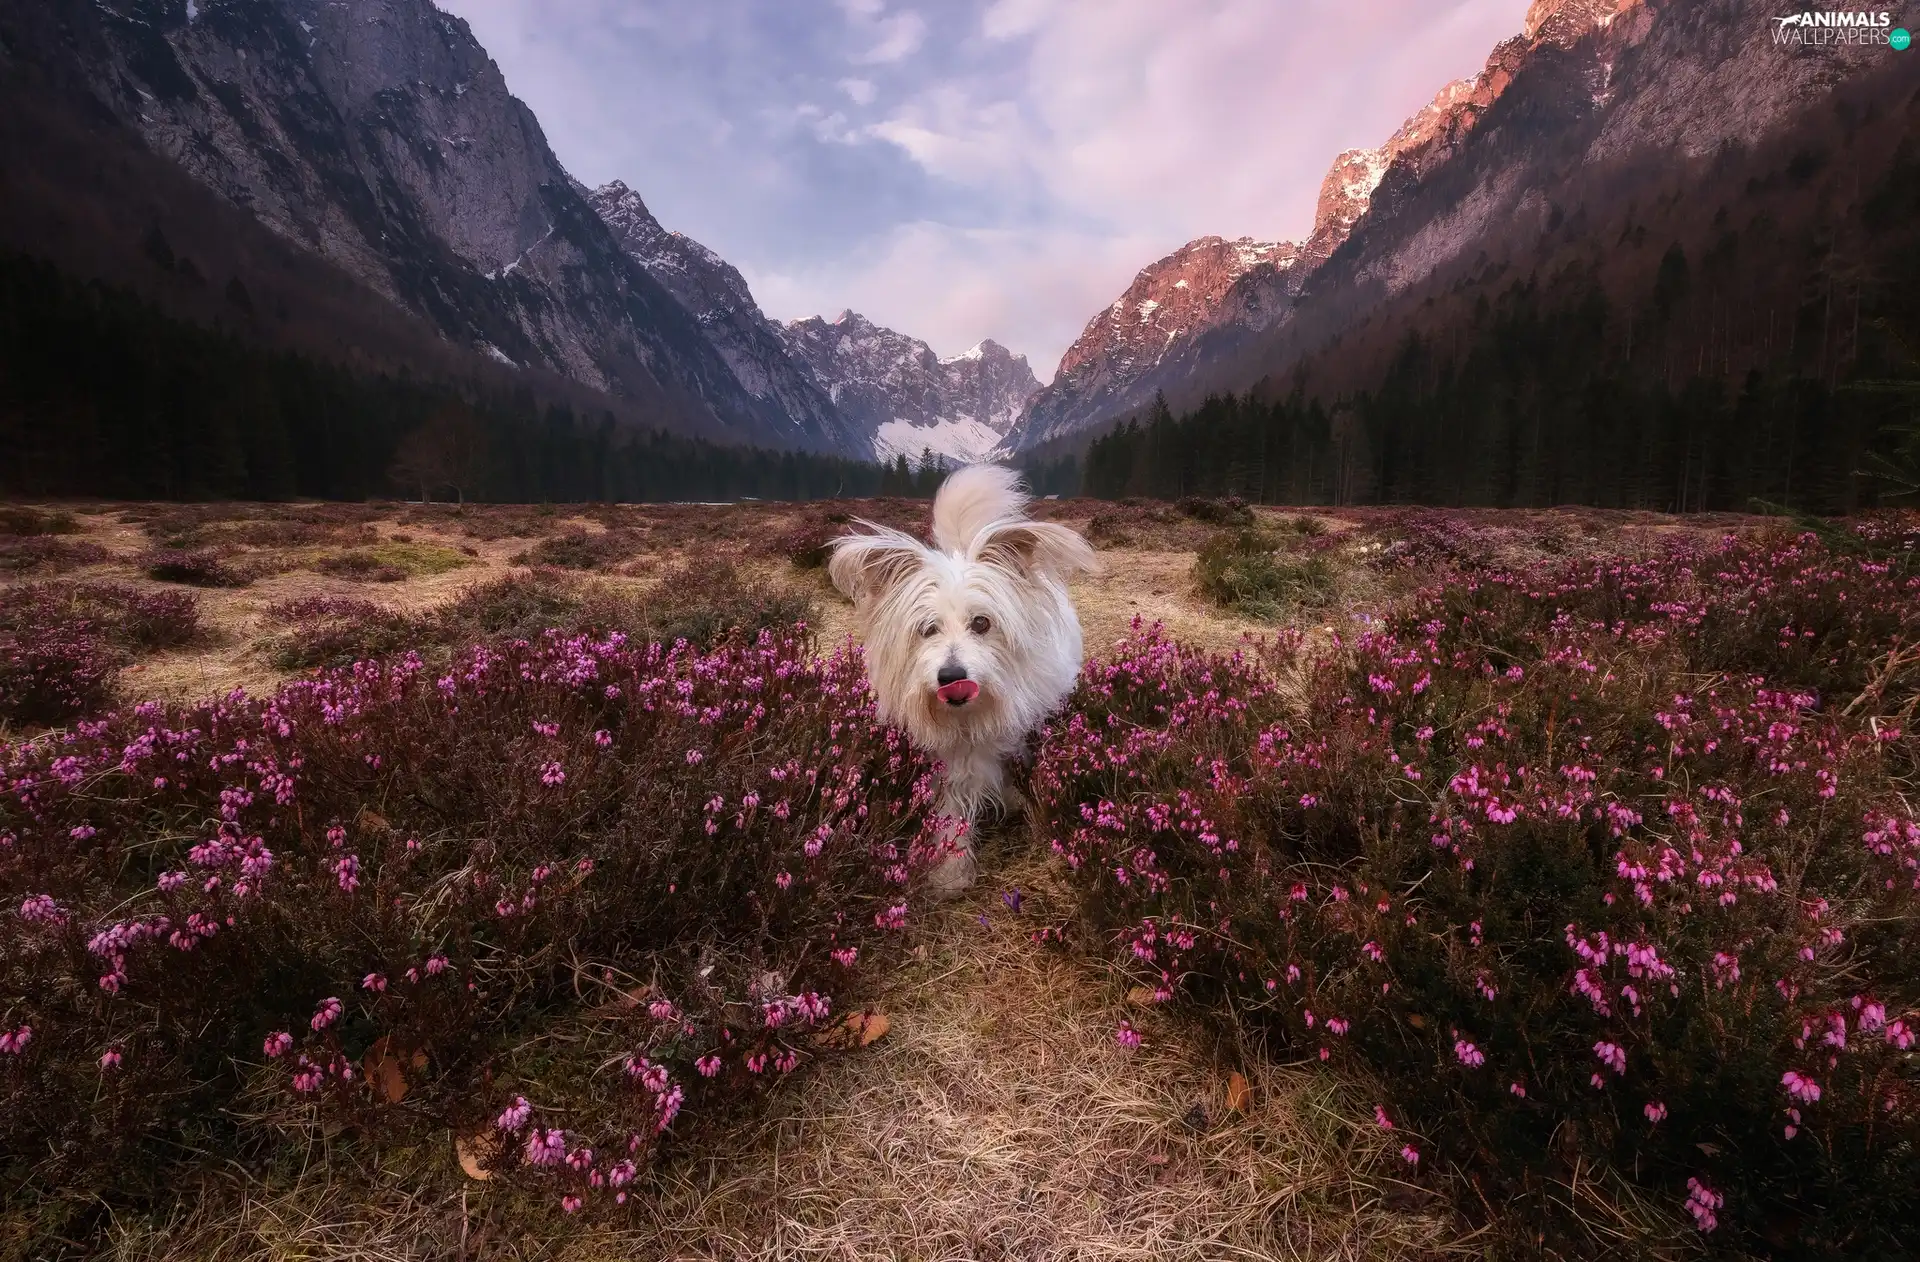 Heath, Krma Valley, trees, heath, viewes, Slovenia, Julian Alps Mountains, dog, rays of the Sun, Flowers